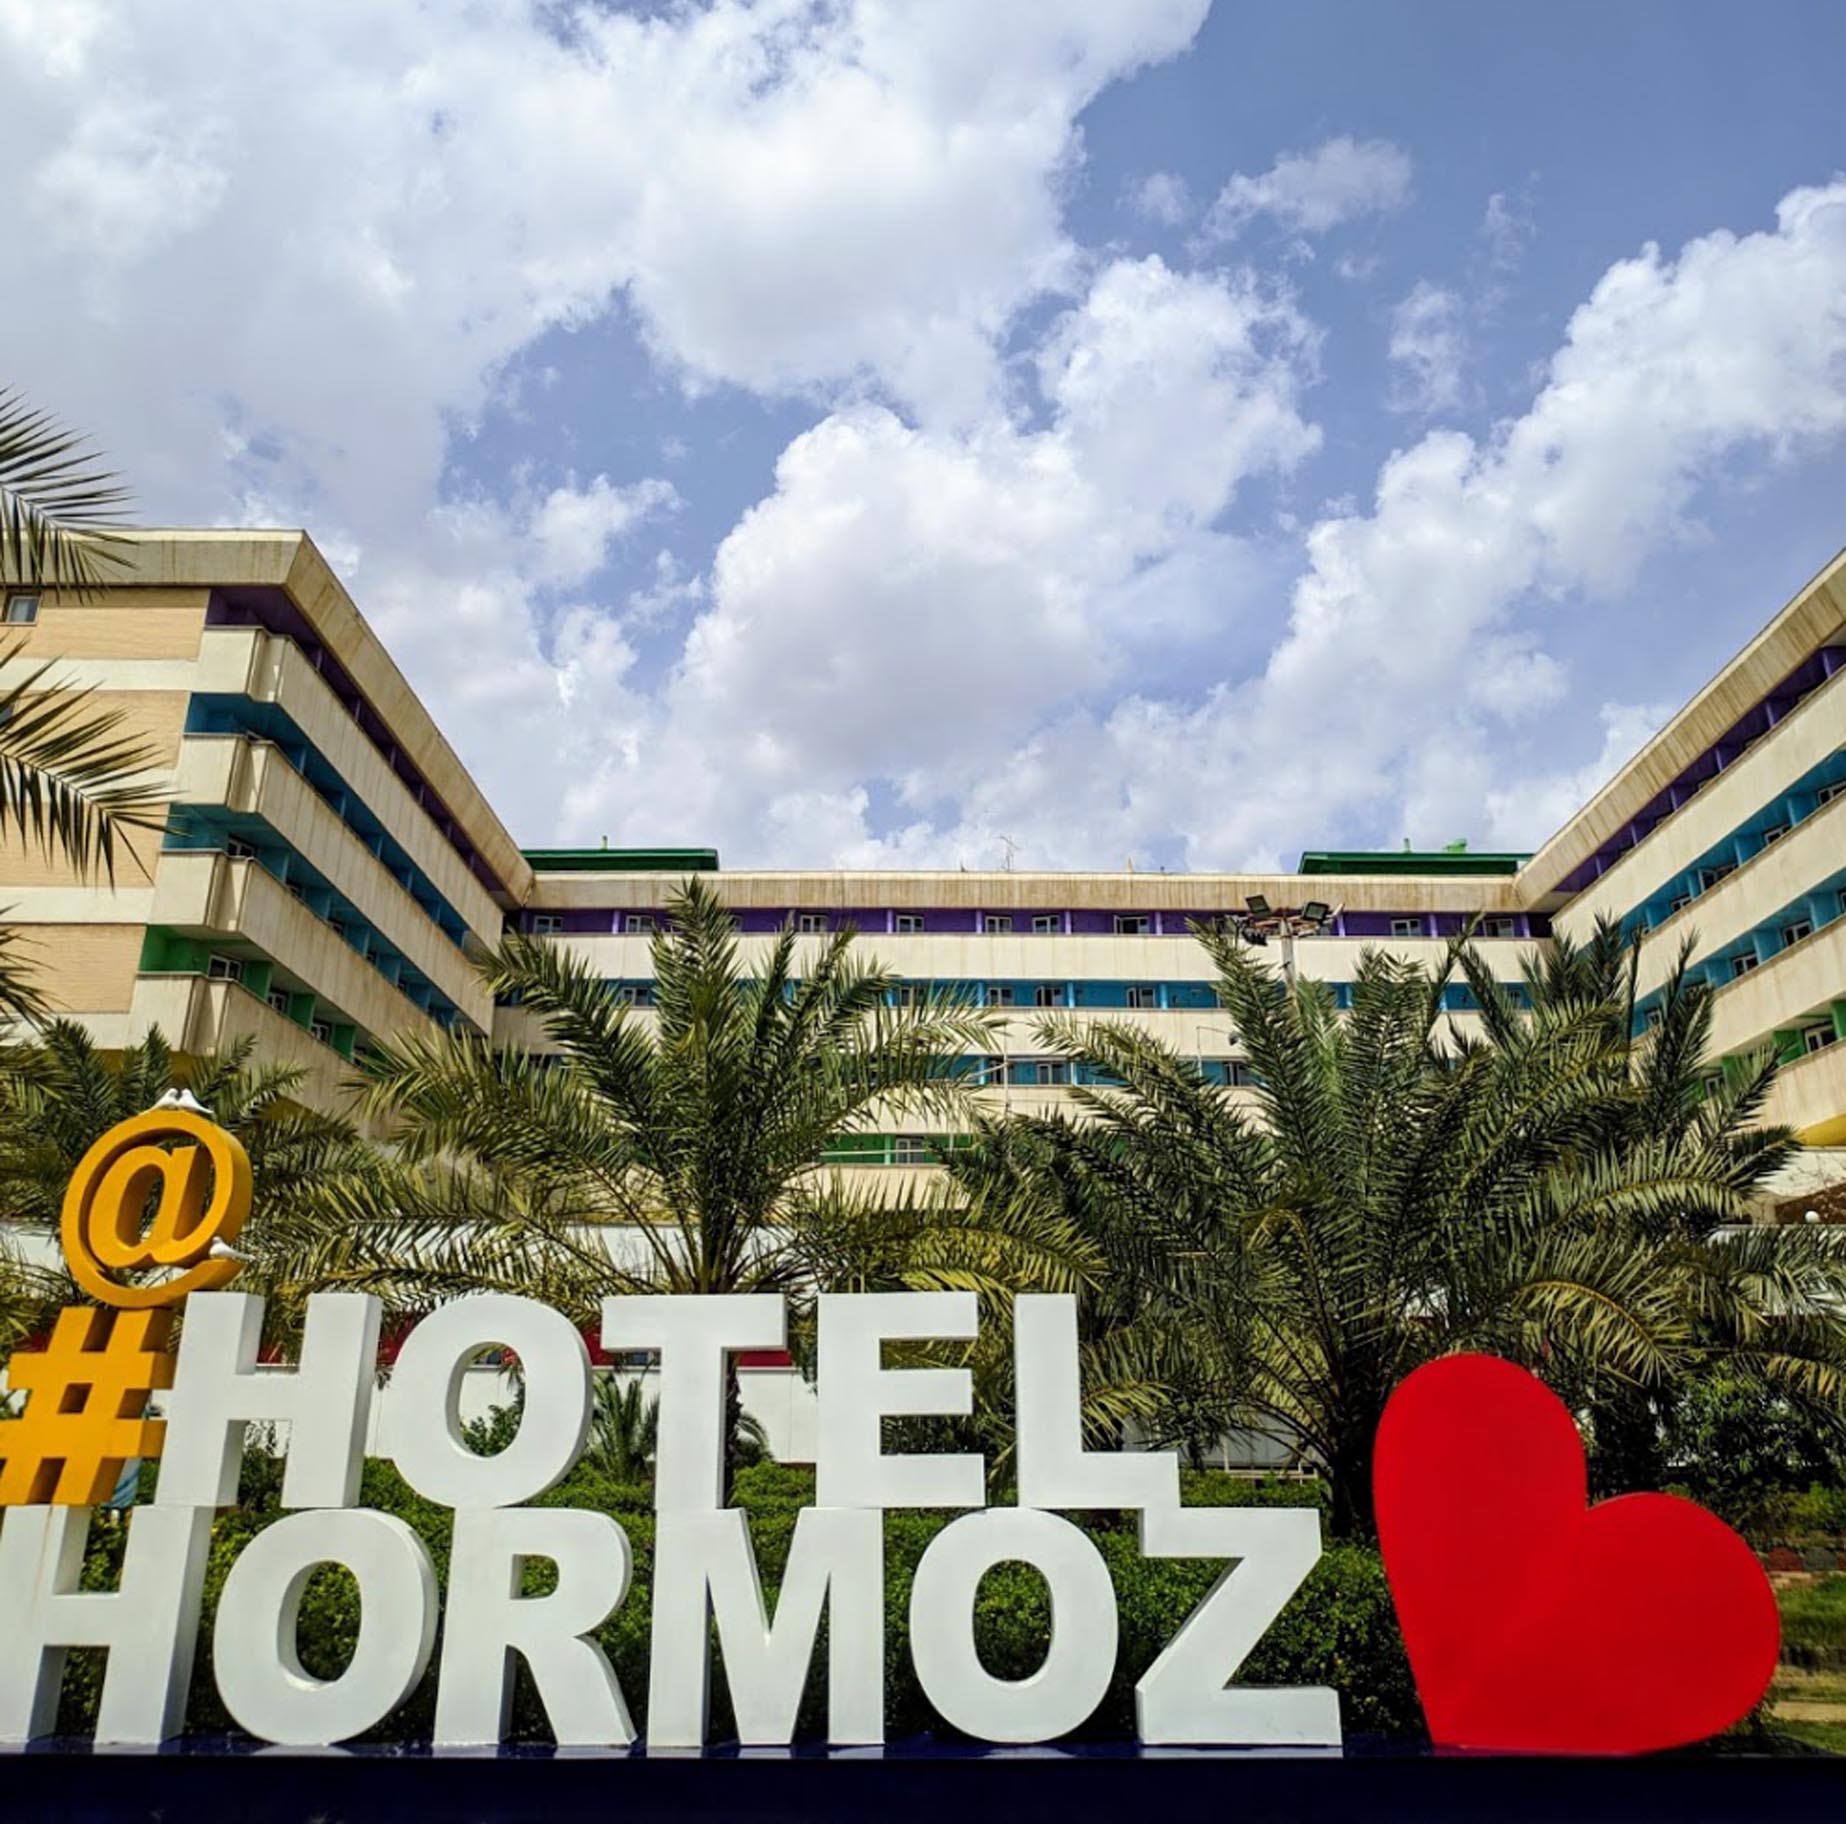 Hotel Hormoz Bandar Abbas Element